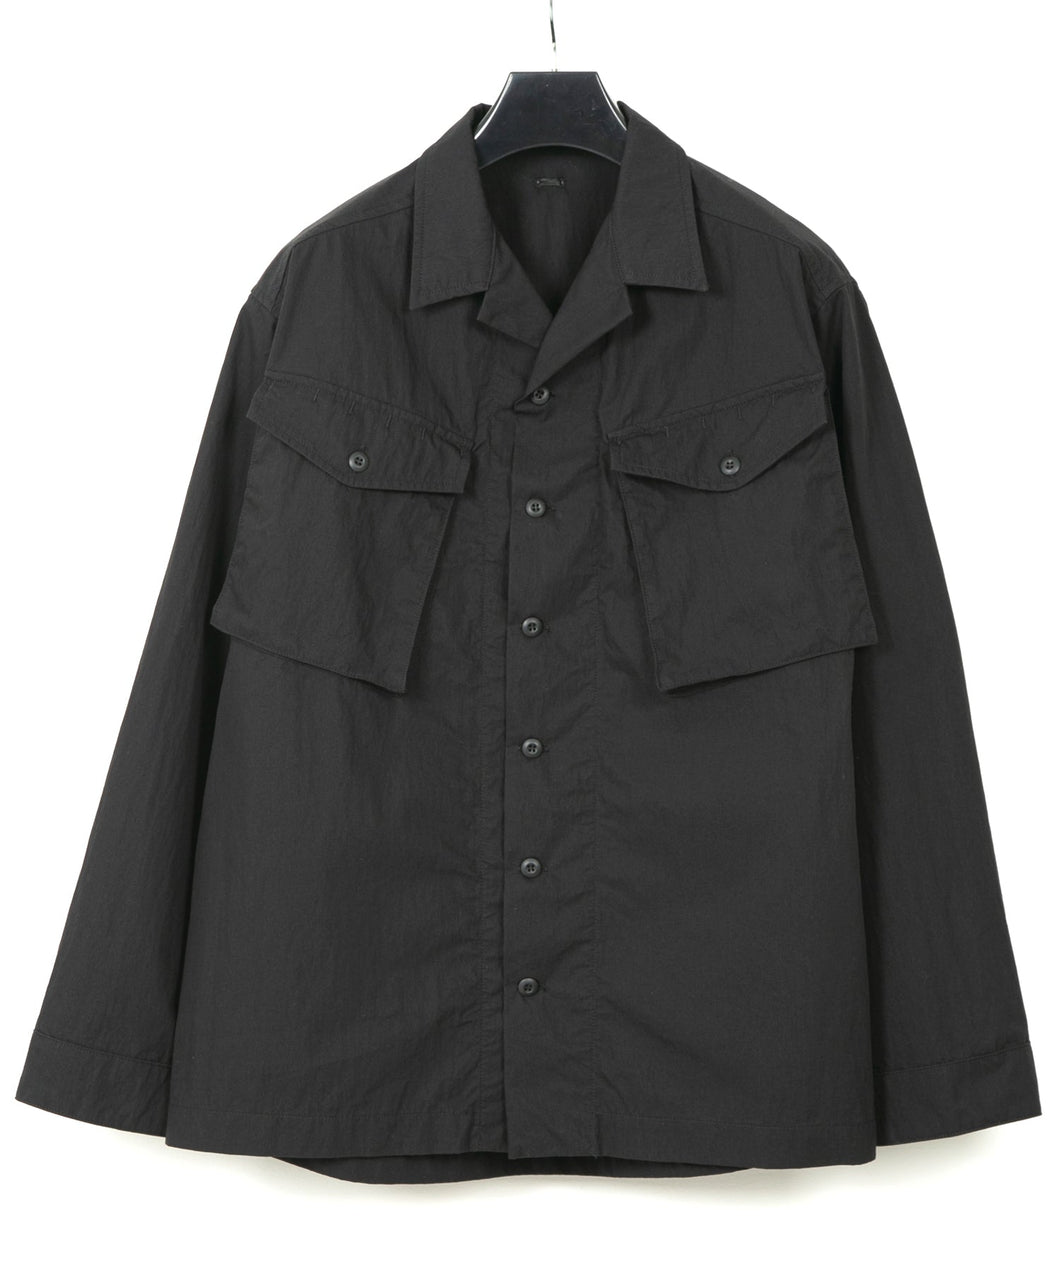 Washer Dyed Cotton & Nylon Weather Cloth Military Shirts Blouson - BLACK